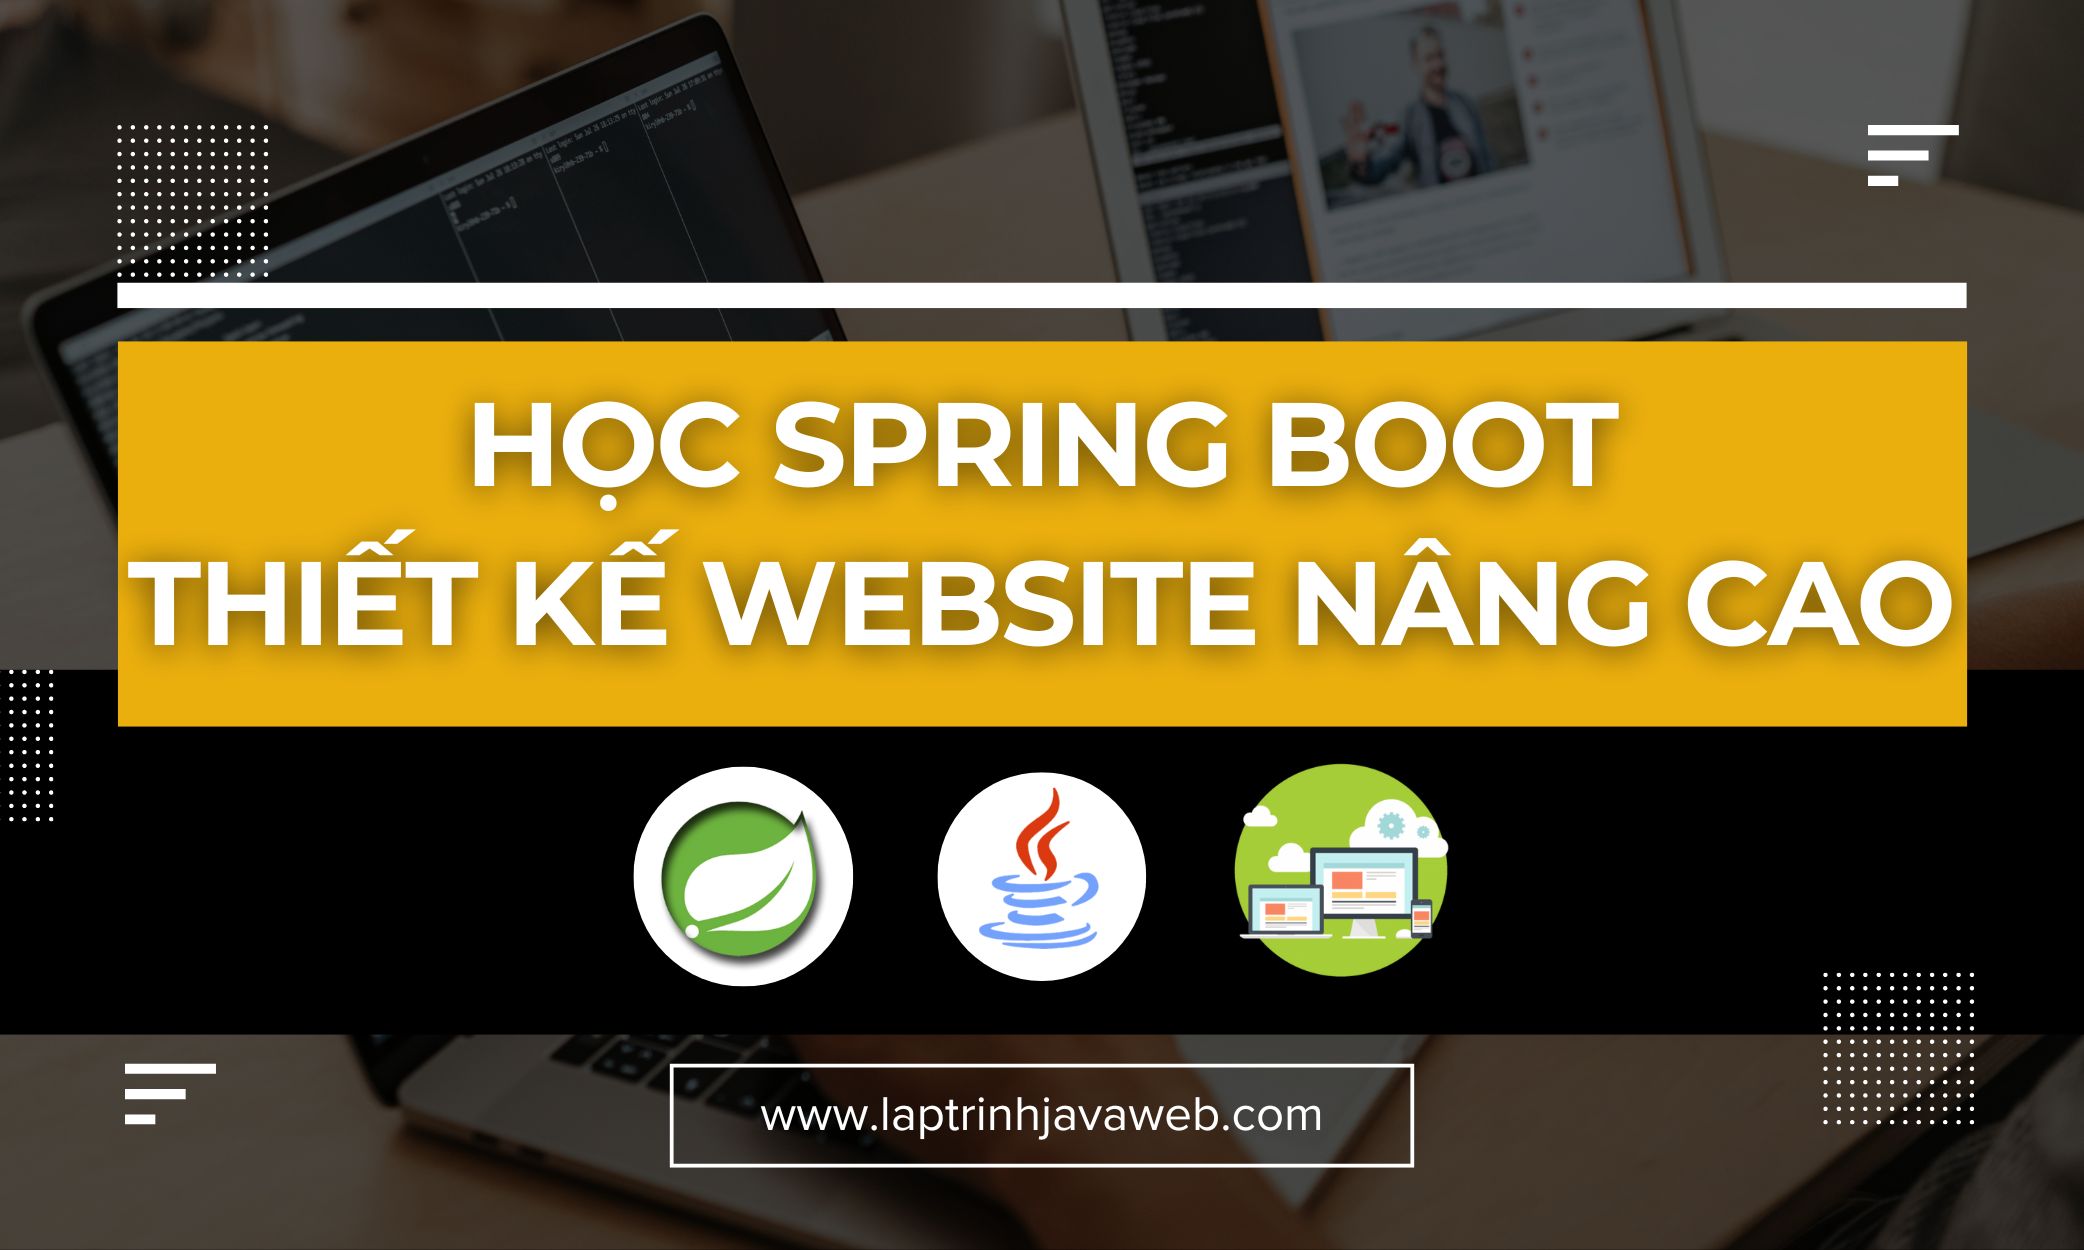 Học spring boot thiết kế website nâng cao